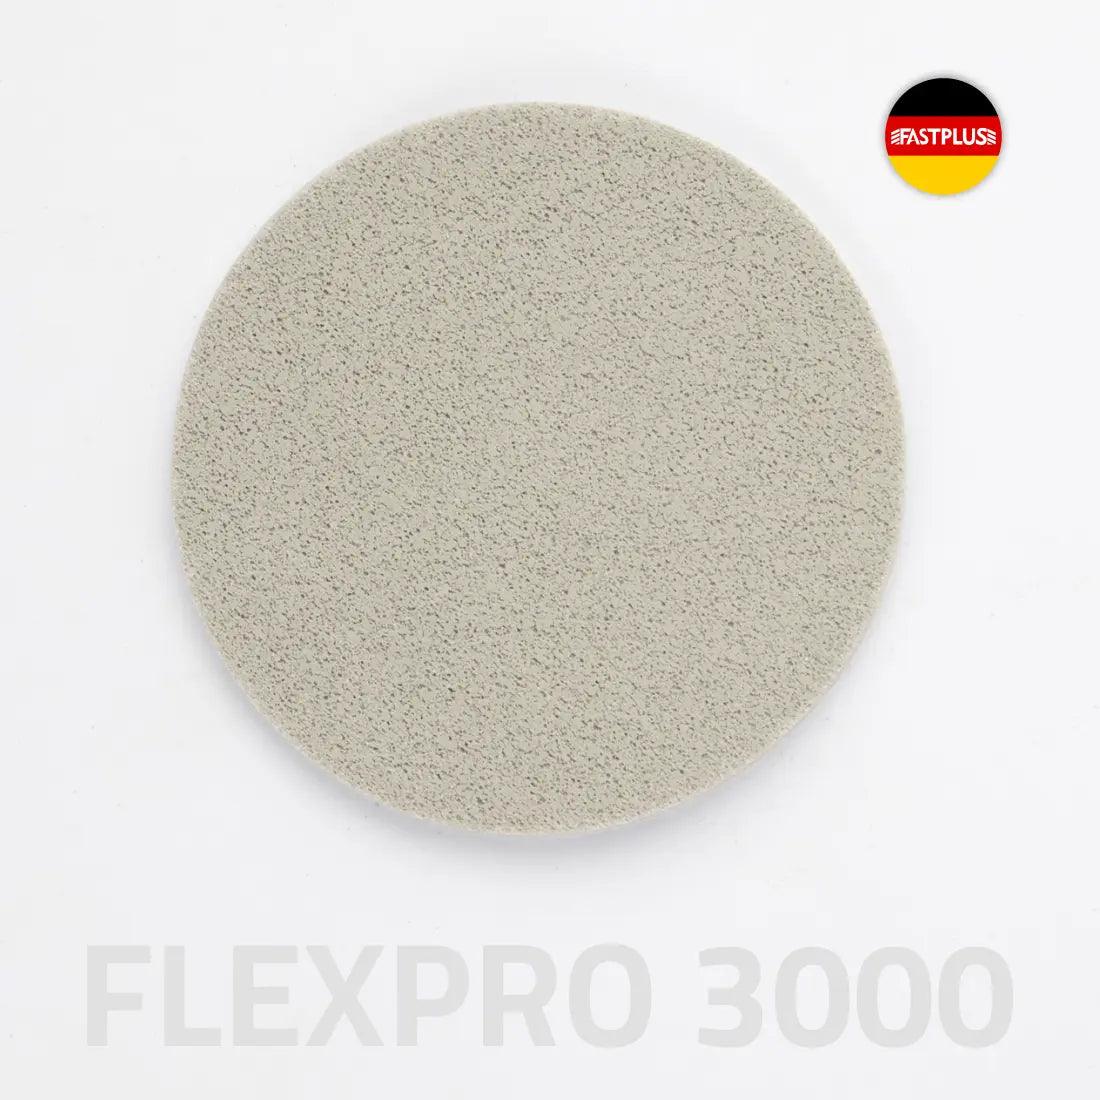 75mm FLEXPRO fine finishing foam discs trizact P3000 Schaumstoff feinschleifscheiben K3000 Disques de finition fine